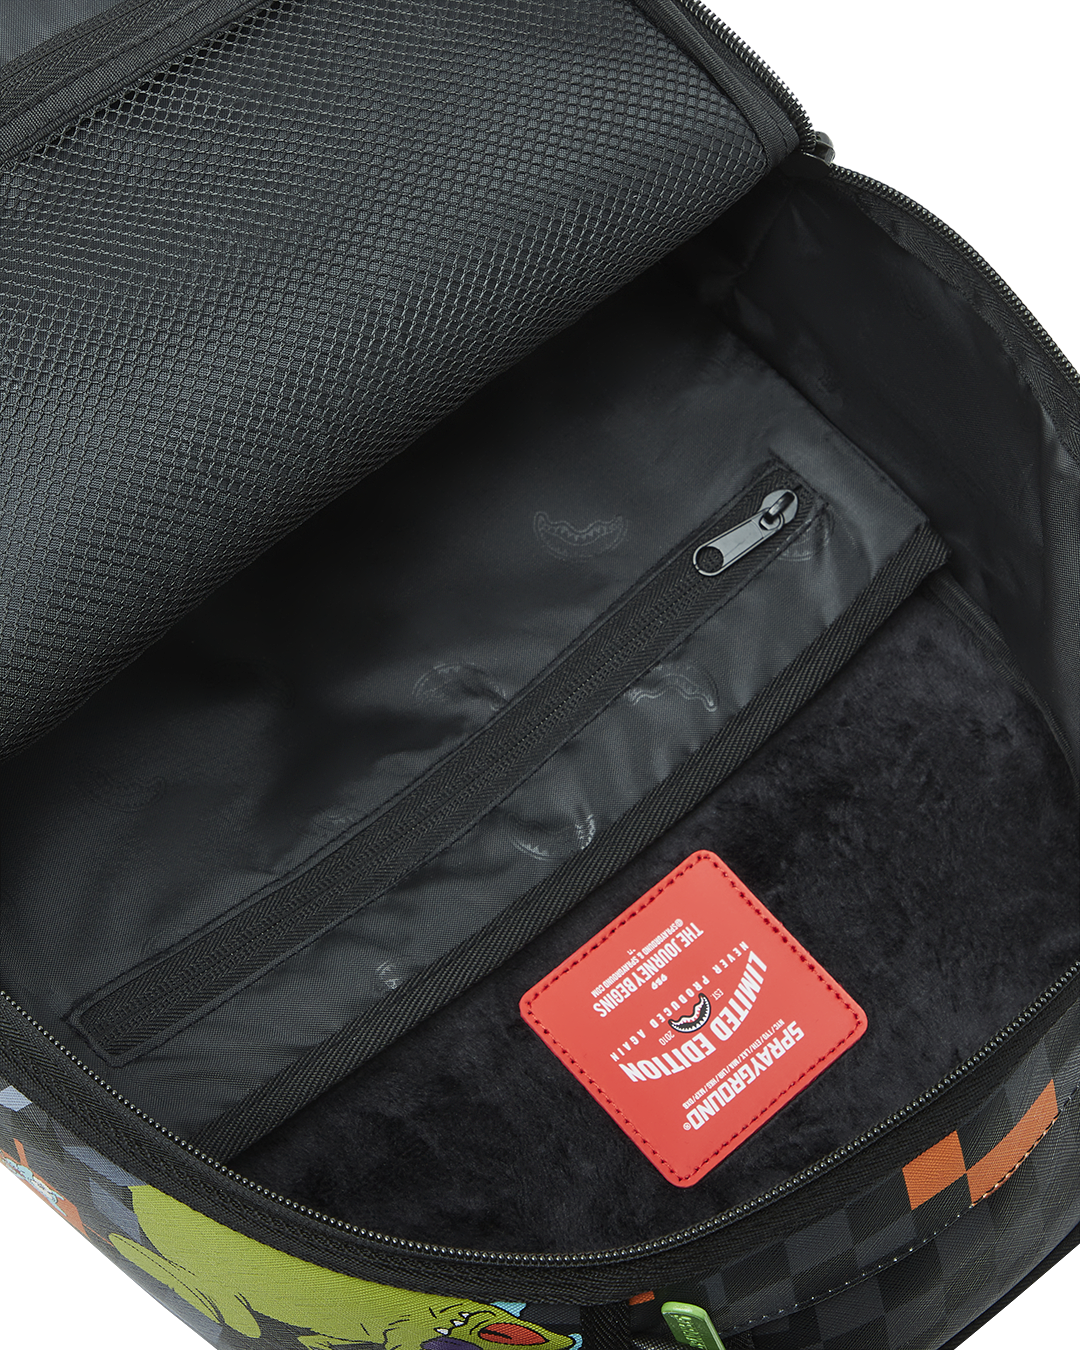 Sprayground Unisex Checkerboard Stud-Embellished Backpack 910B4057NSZ Brown